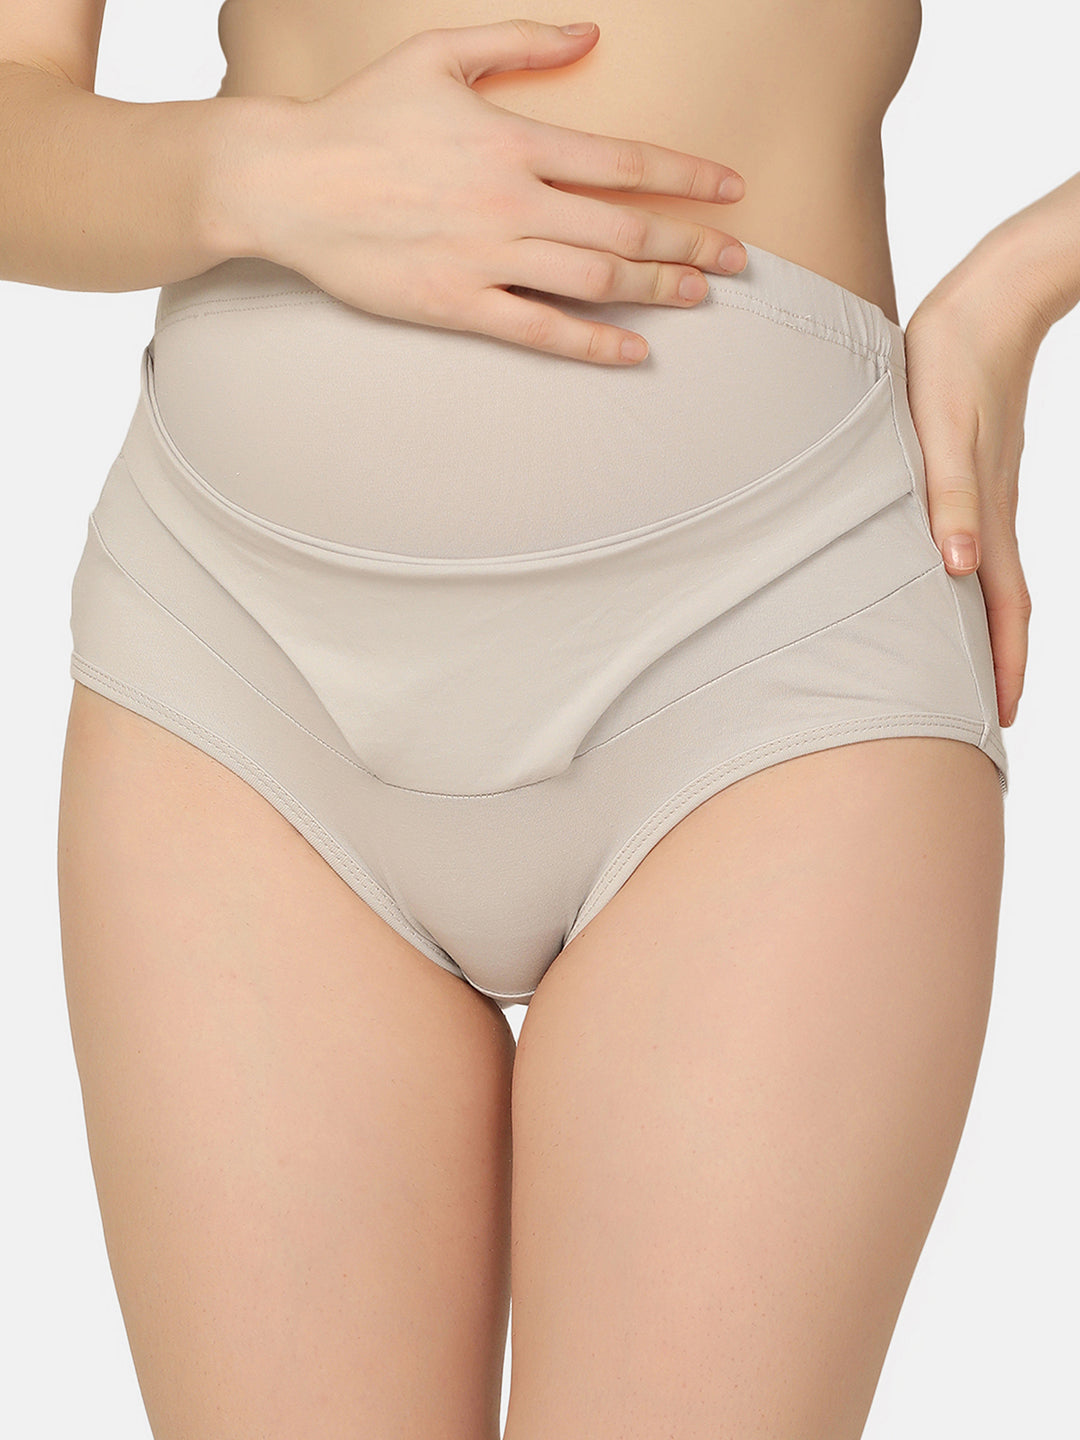 Mamma Presto Pack Of Two High Rise Pre Pregnancy Panty - Da Intimo - Lingerie Online Store India